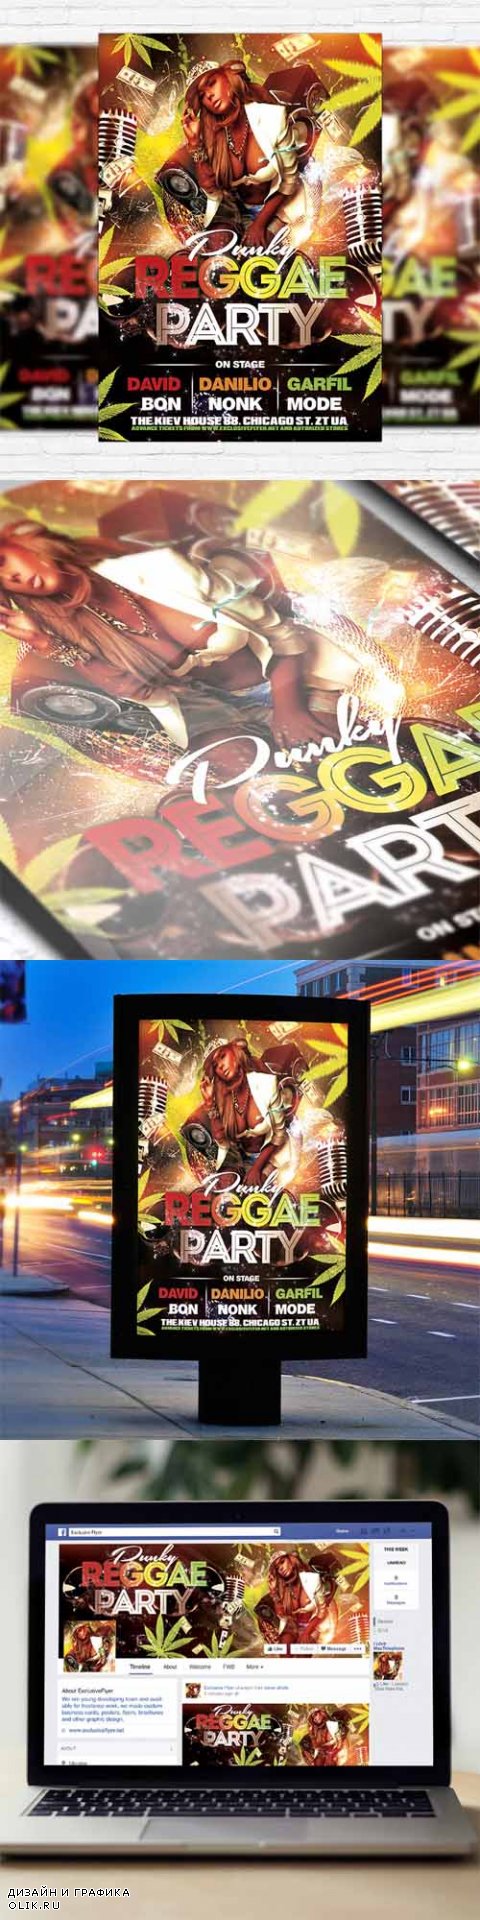 Flyer Template PSD - Reggae Party + Facebook Cover